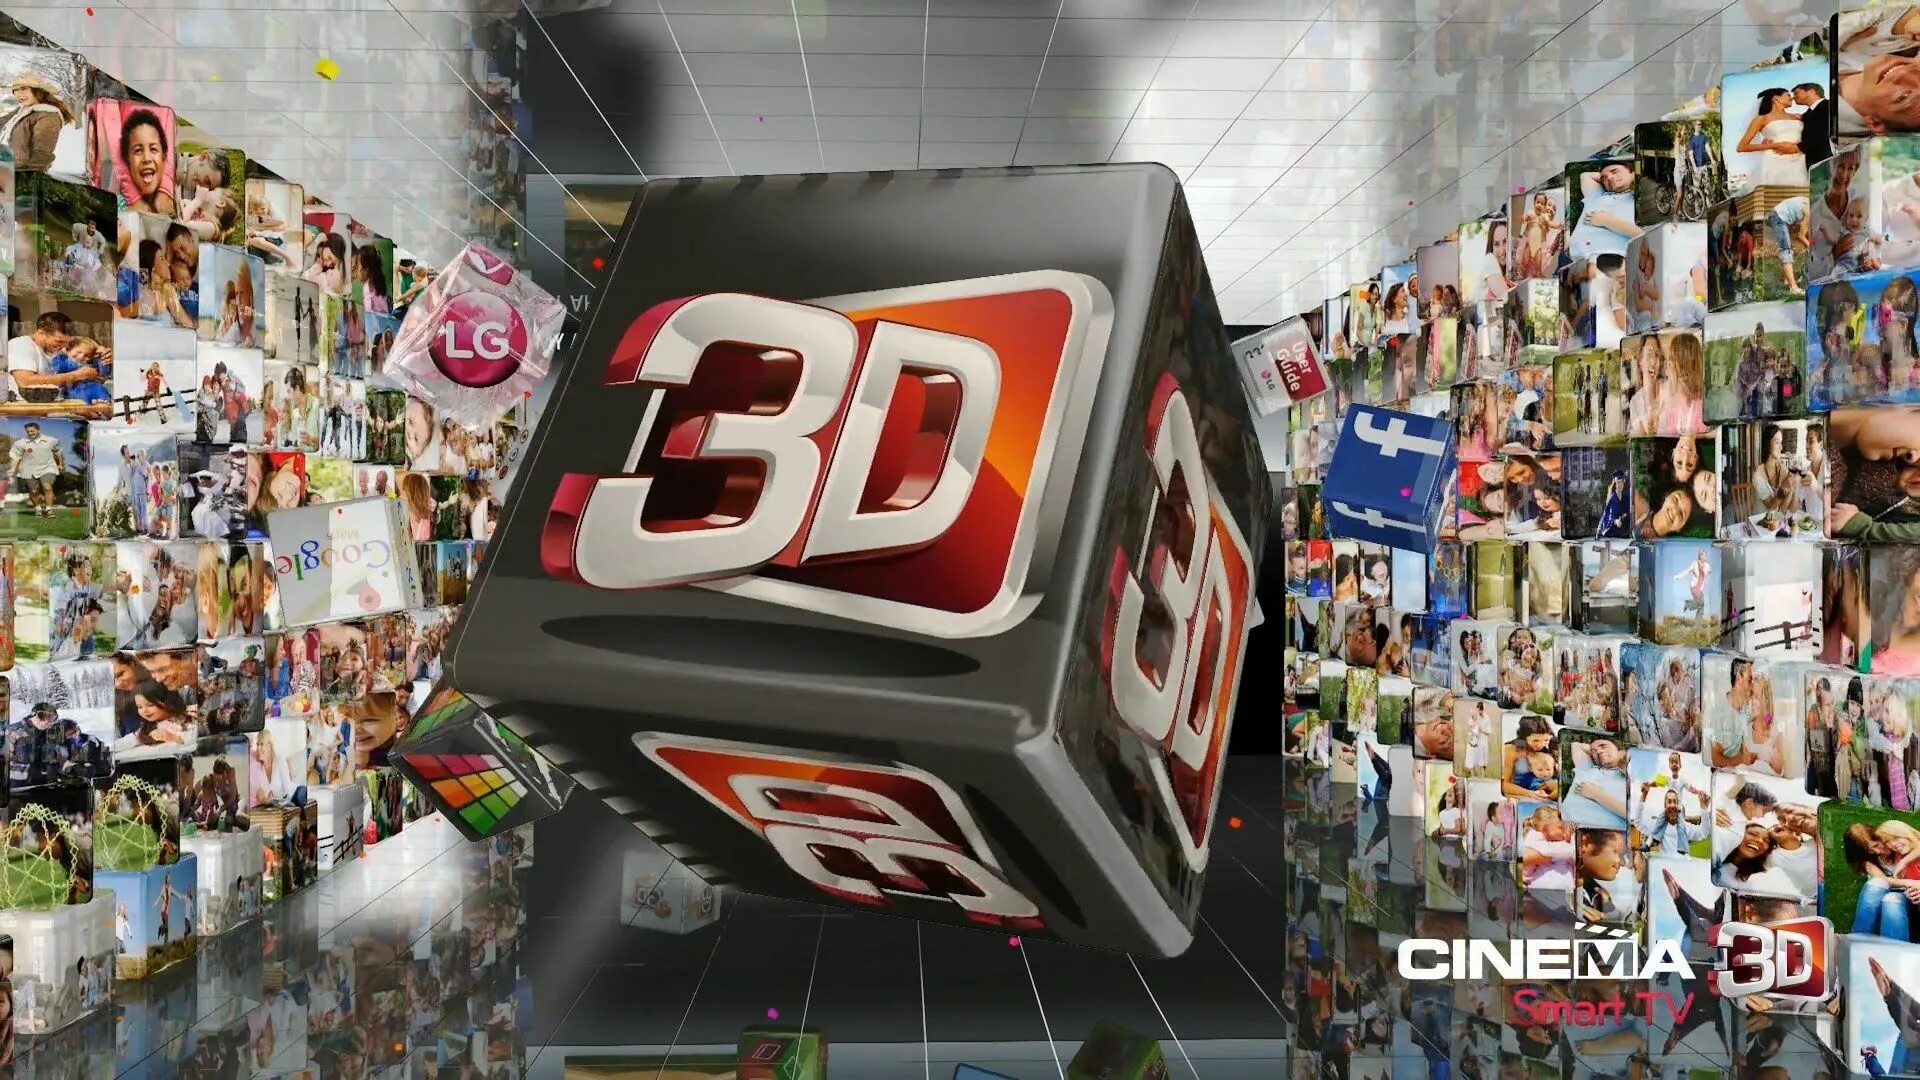 LG 3d. LG 3d Demo. LG Cinema 3d. 3d demo